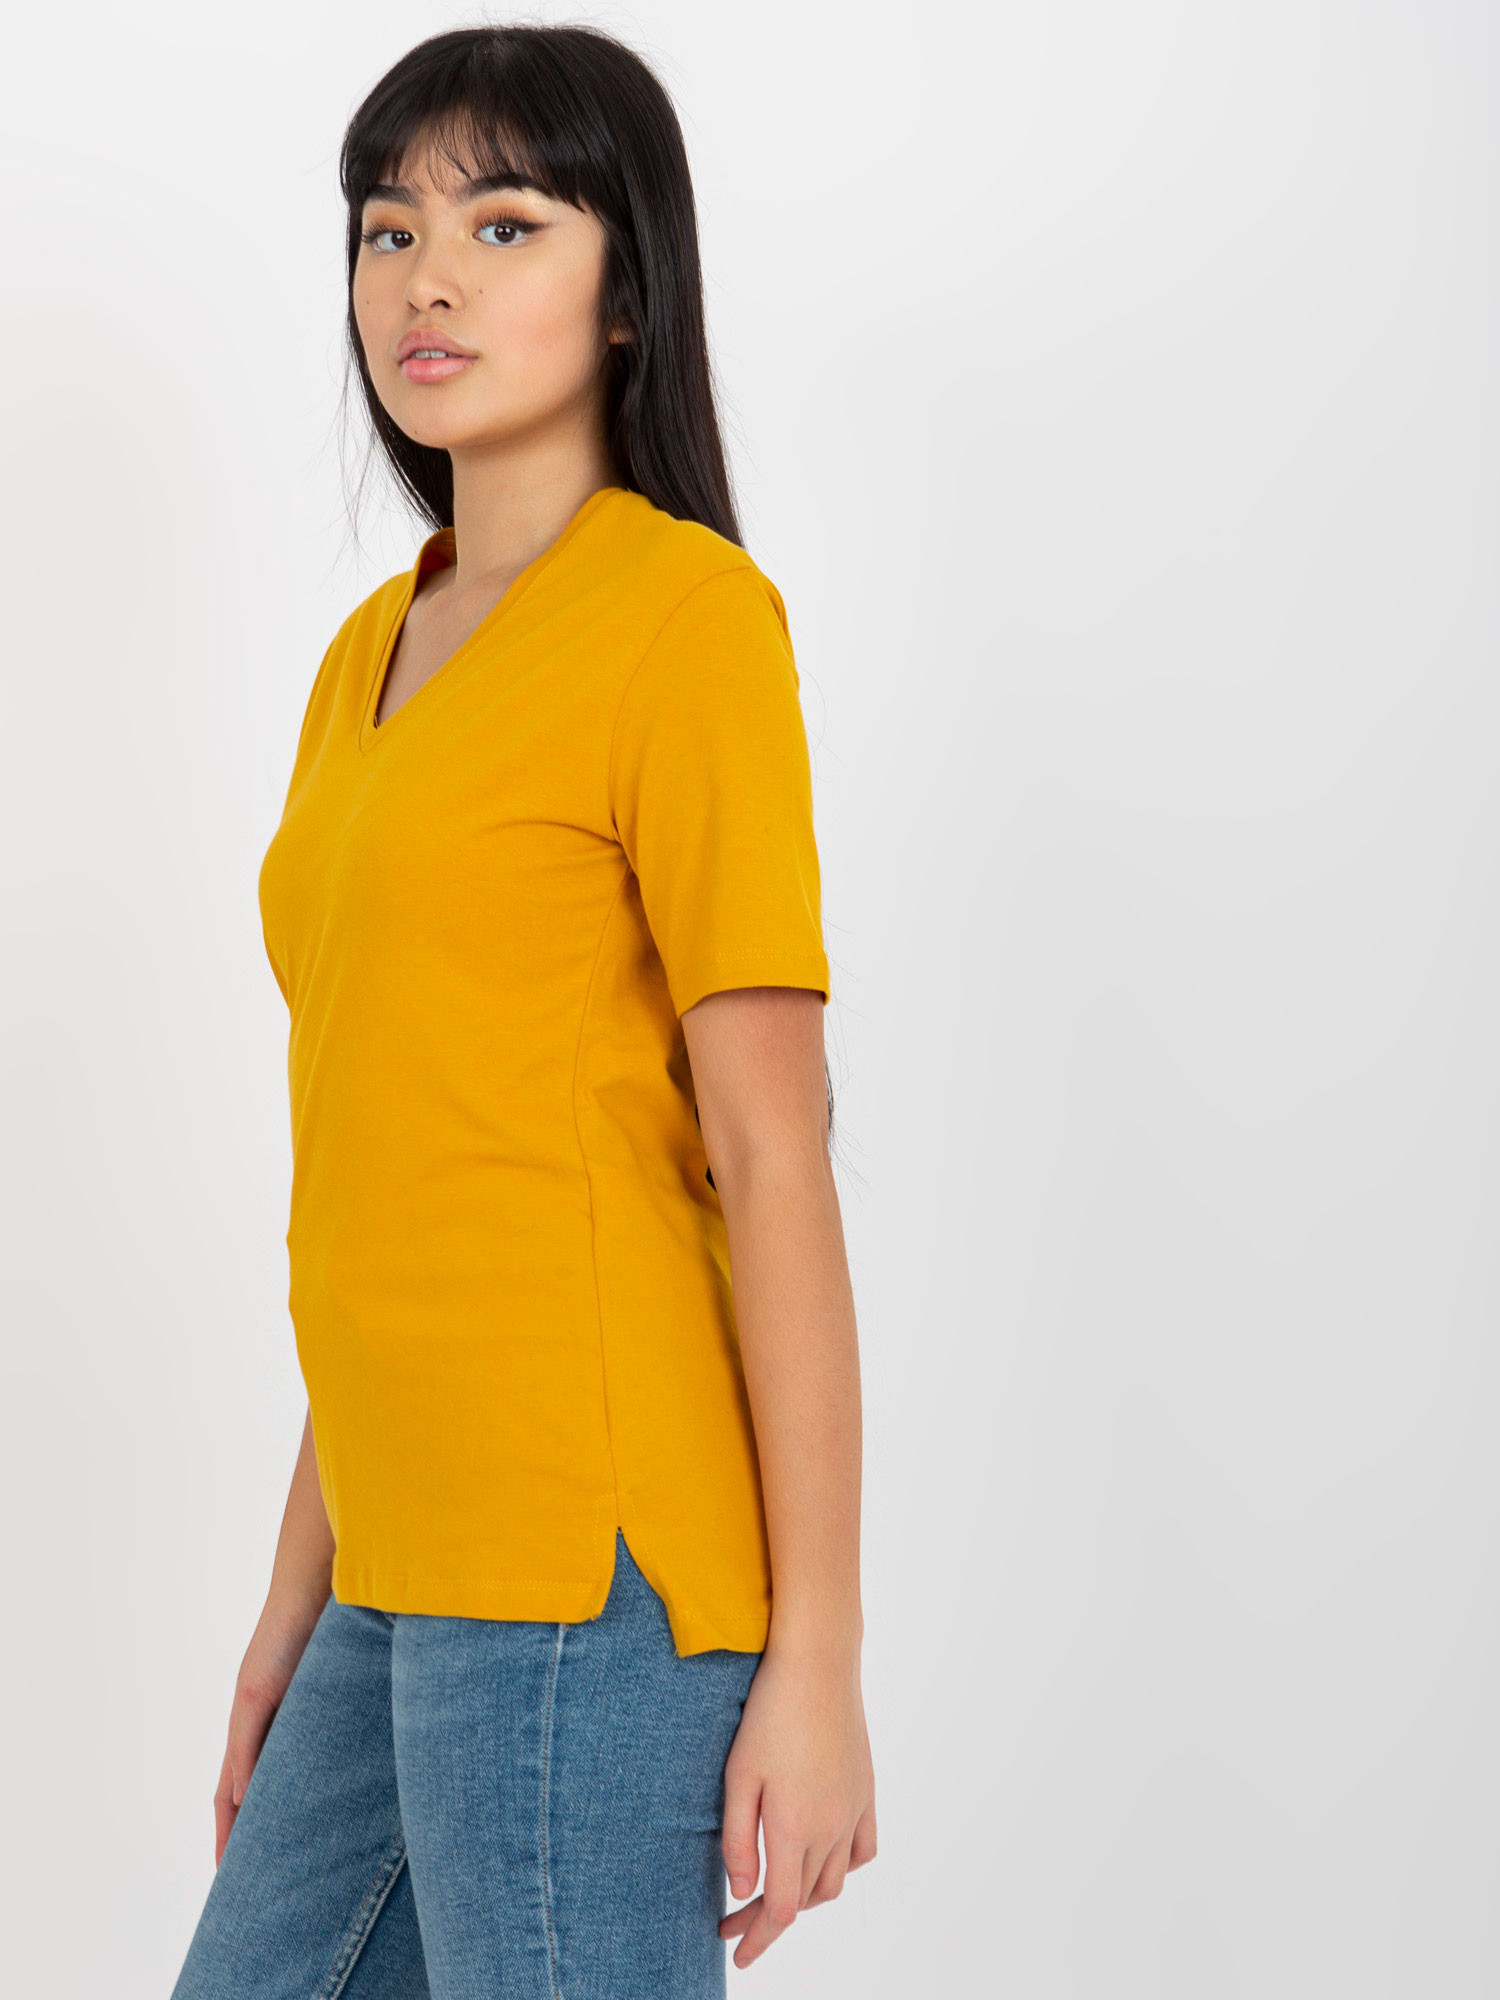 Dámské tričko EM TS HS 20 25.41X tmavě žlutá - FPrice M